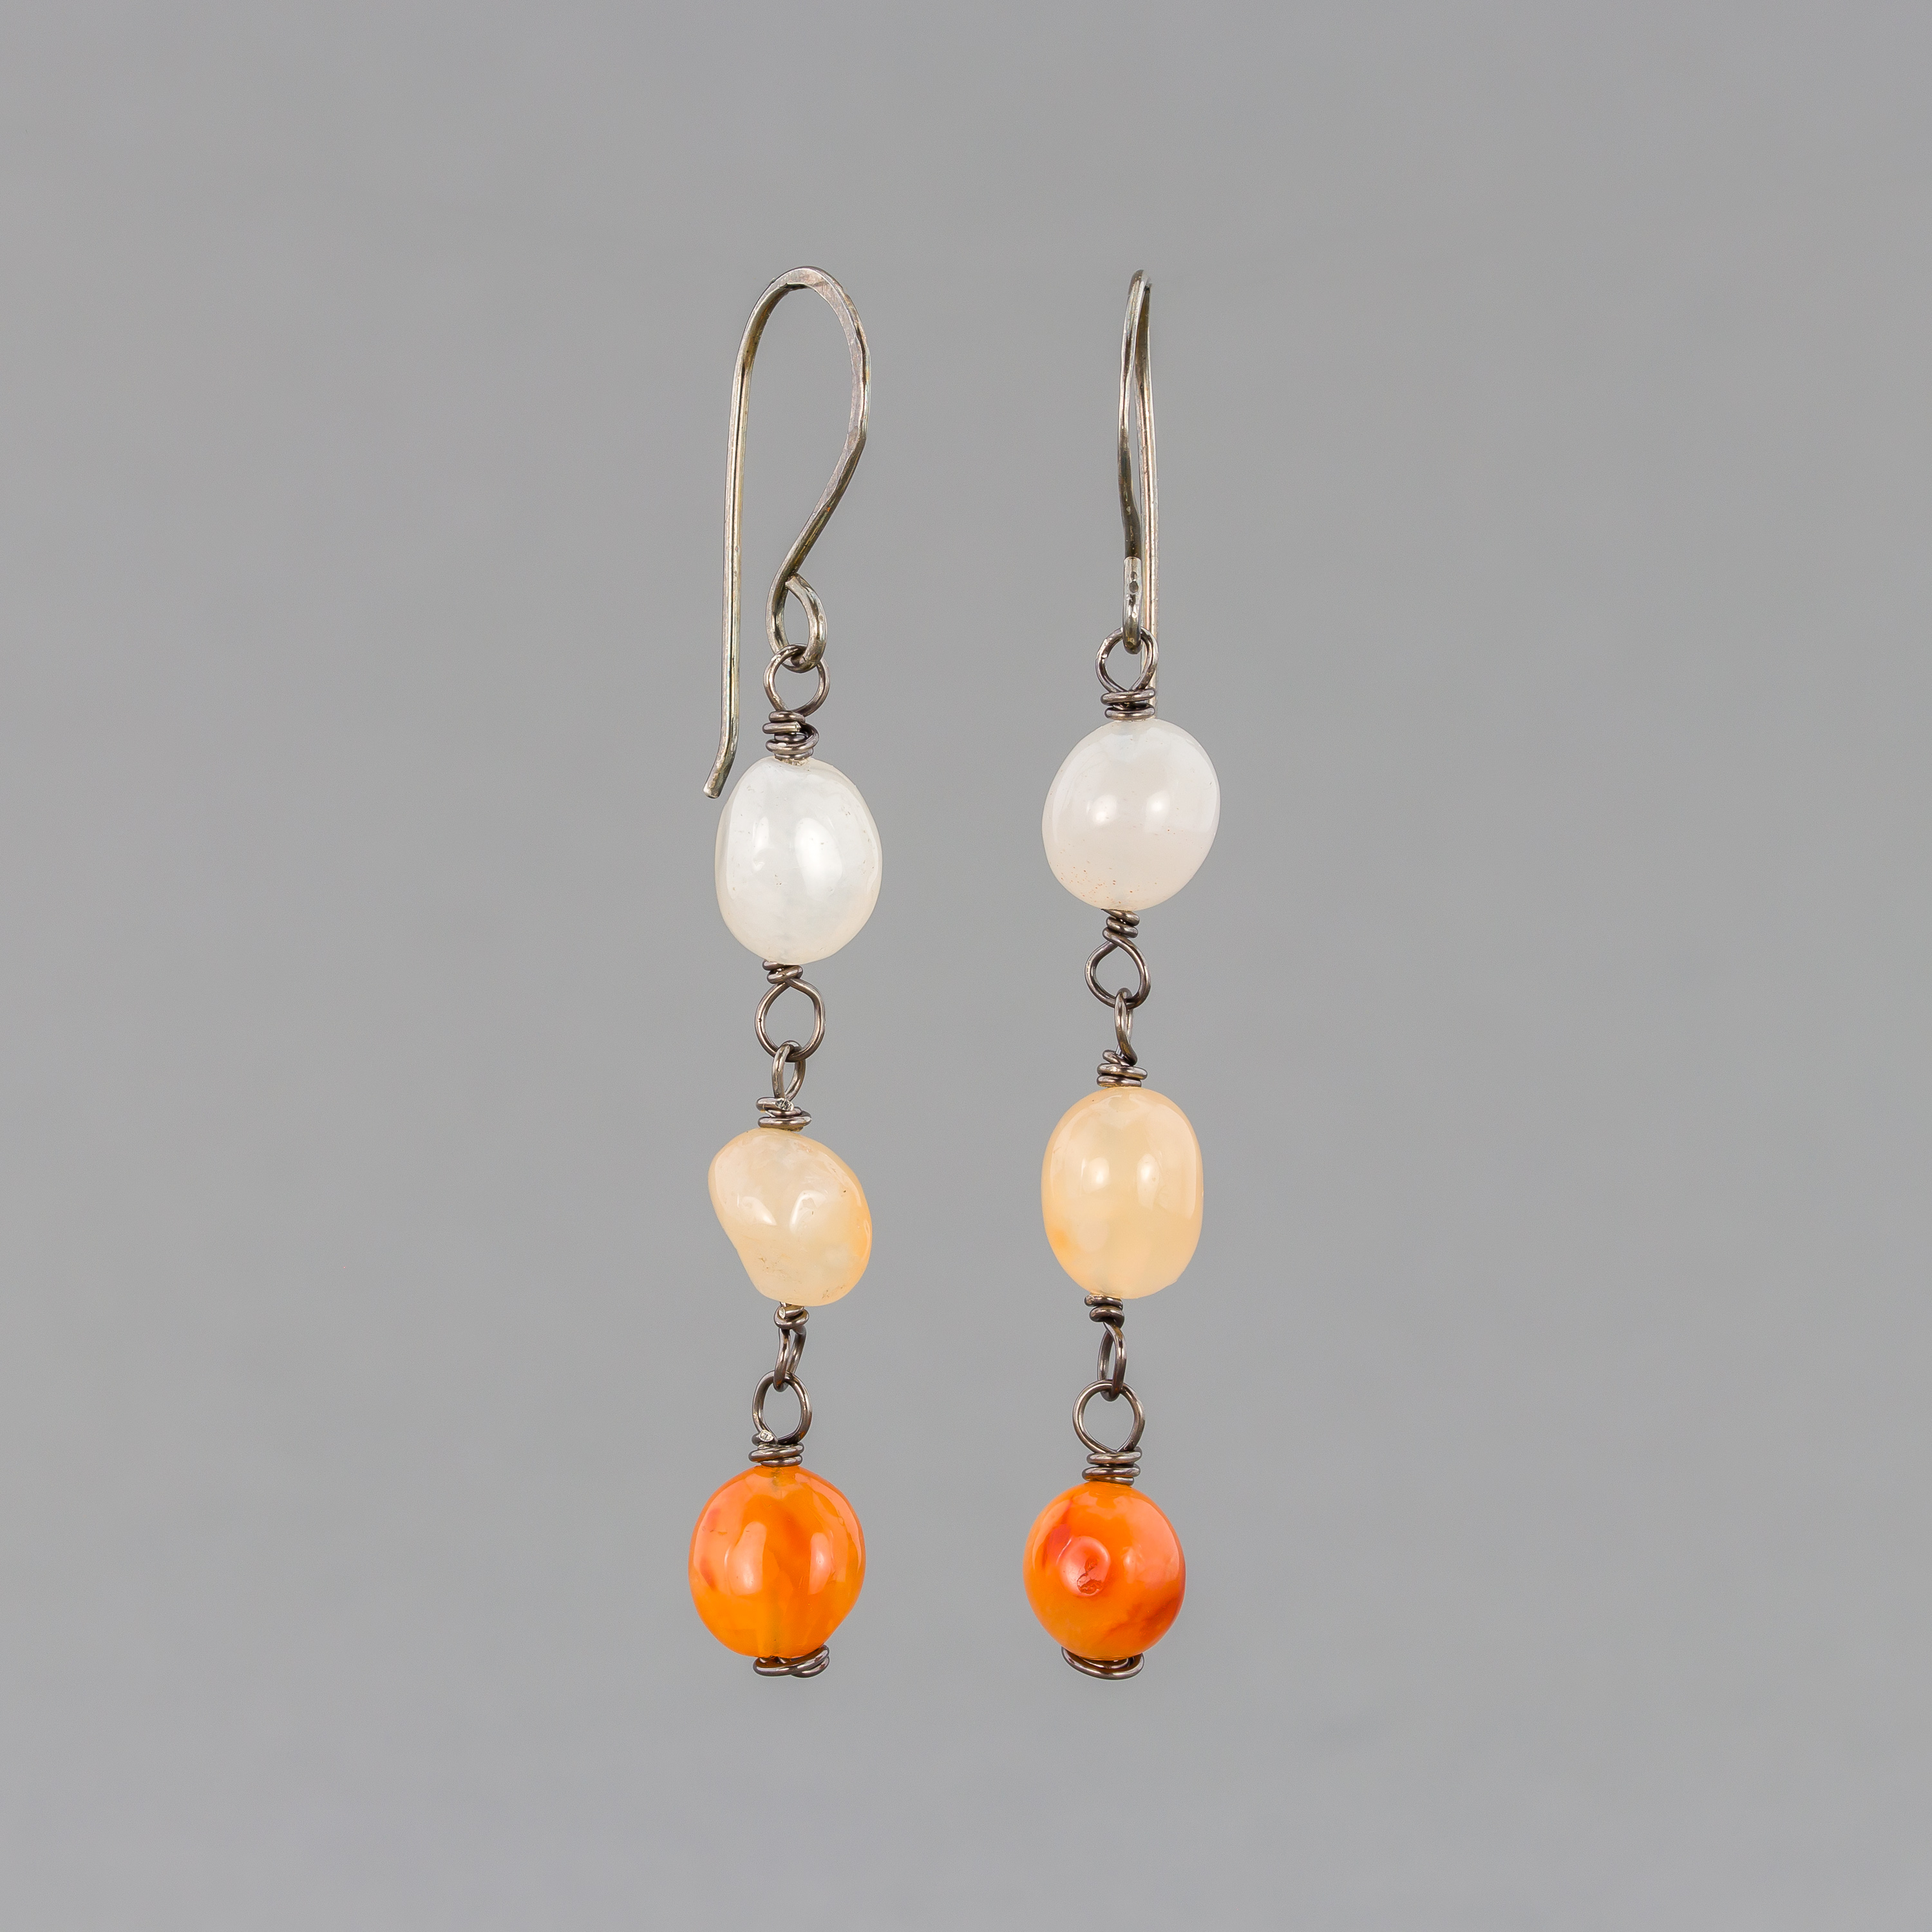 Burnt orange agate and pearl earrings